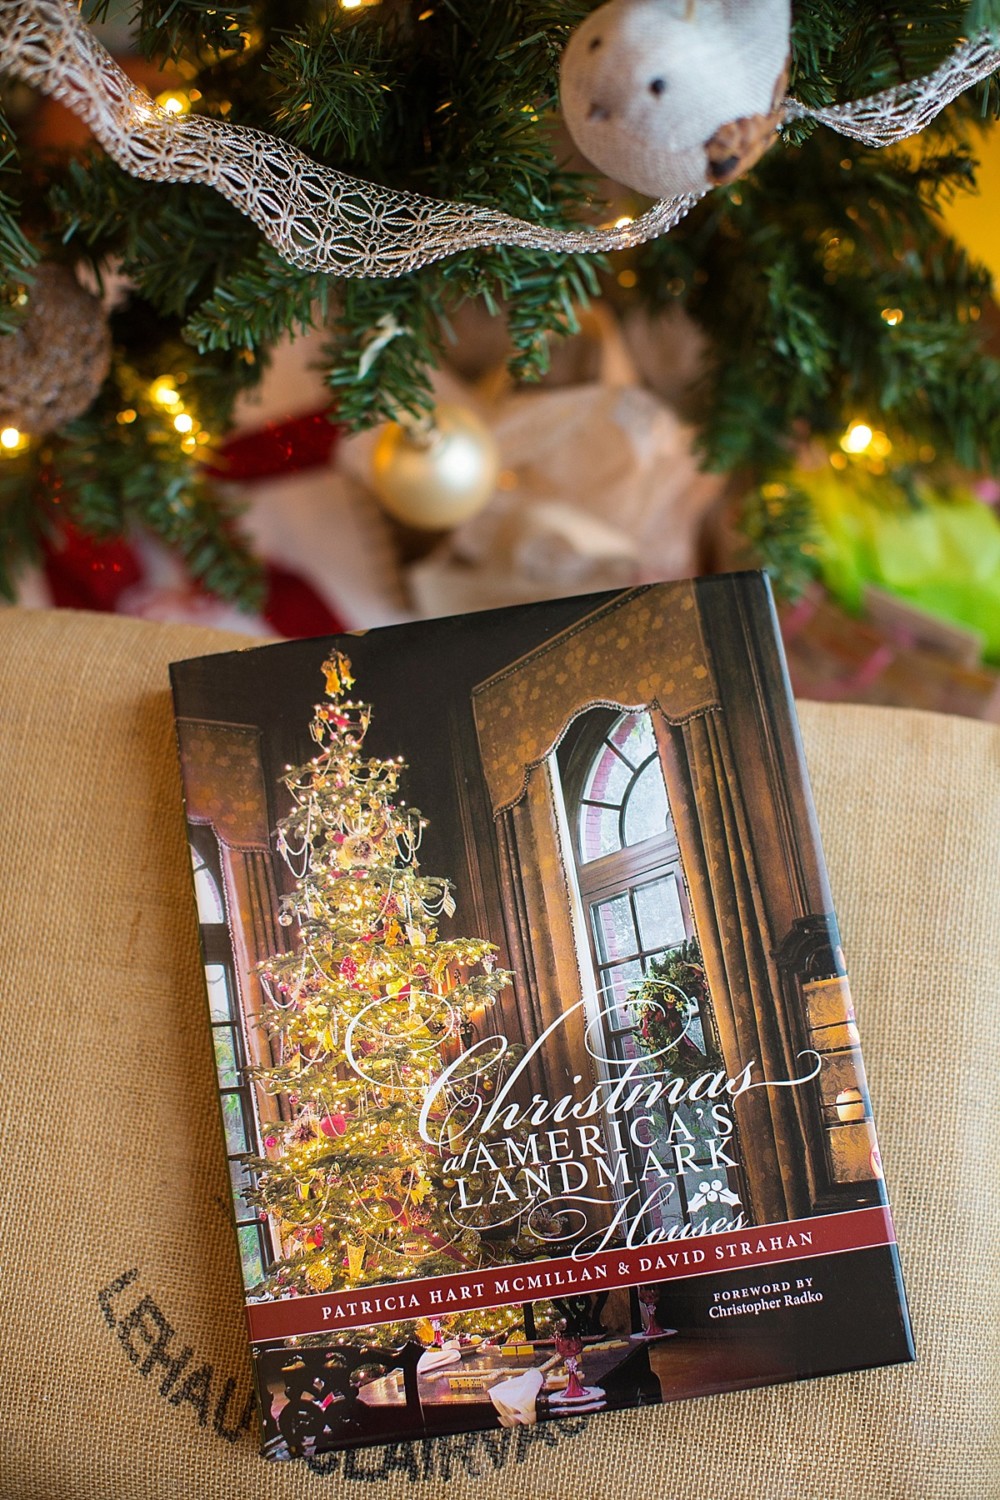 Christmas at America's Landmark Houses - Diana Elizabeth